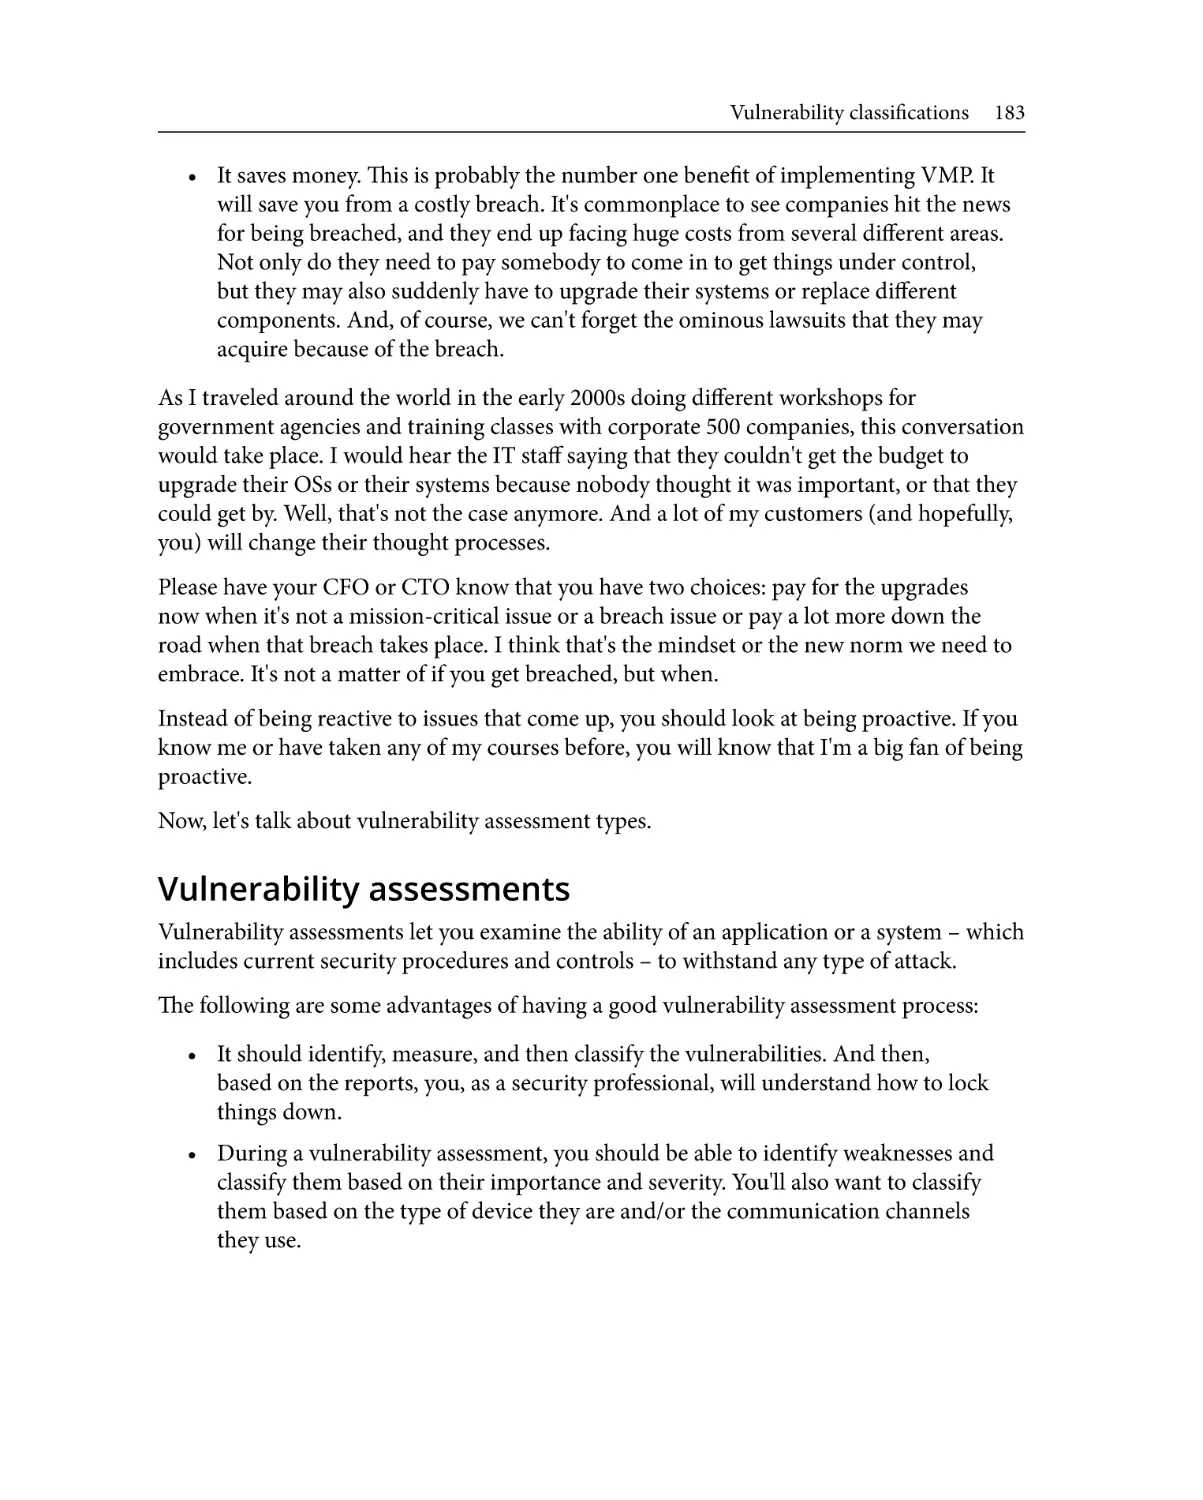 Vulnerability assessments